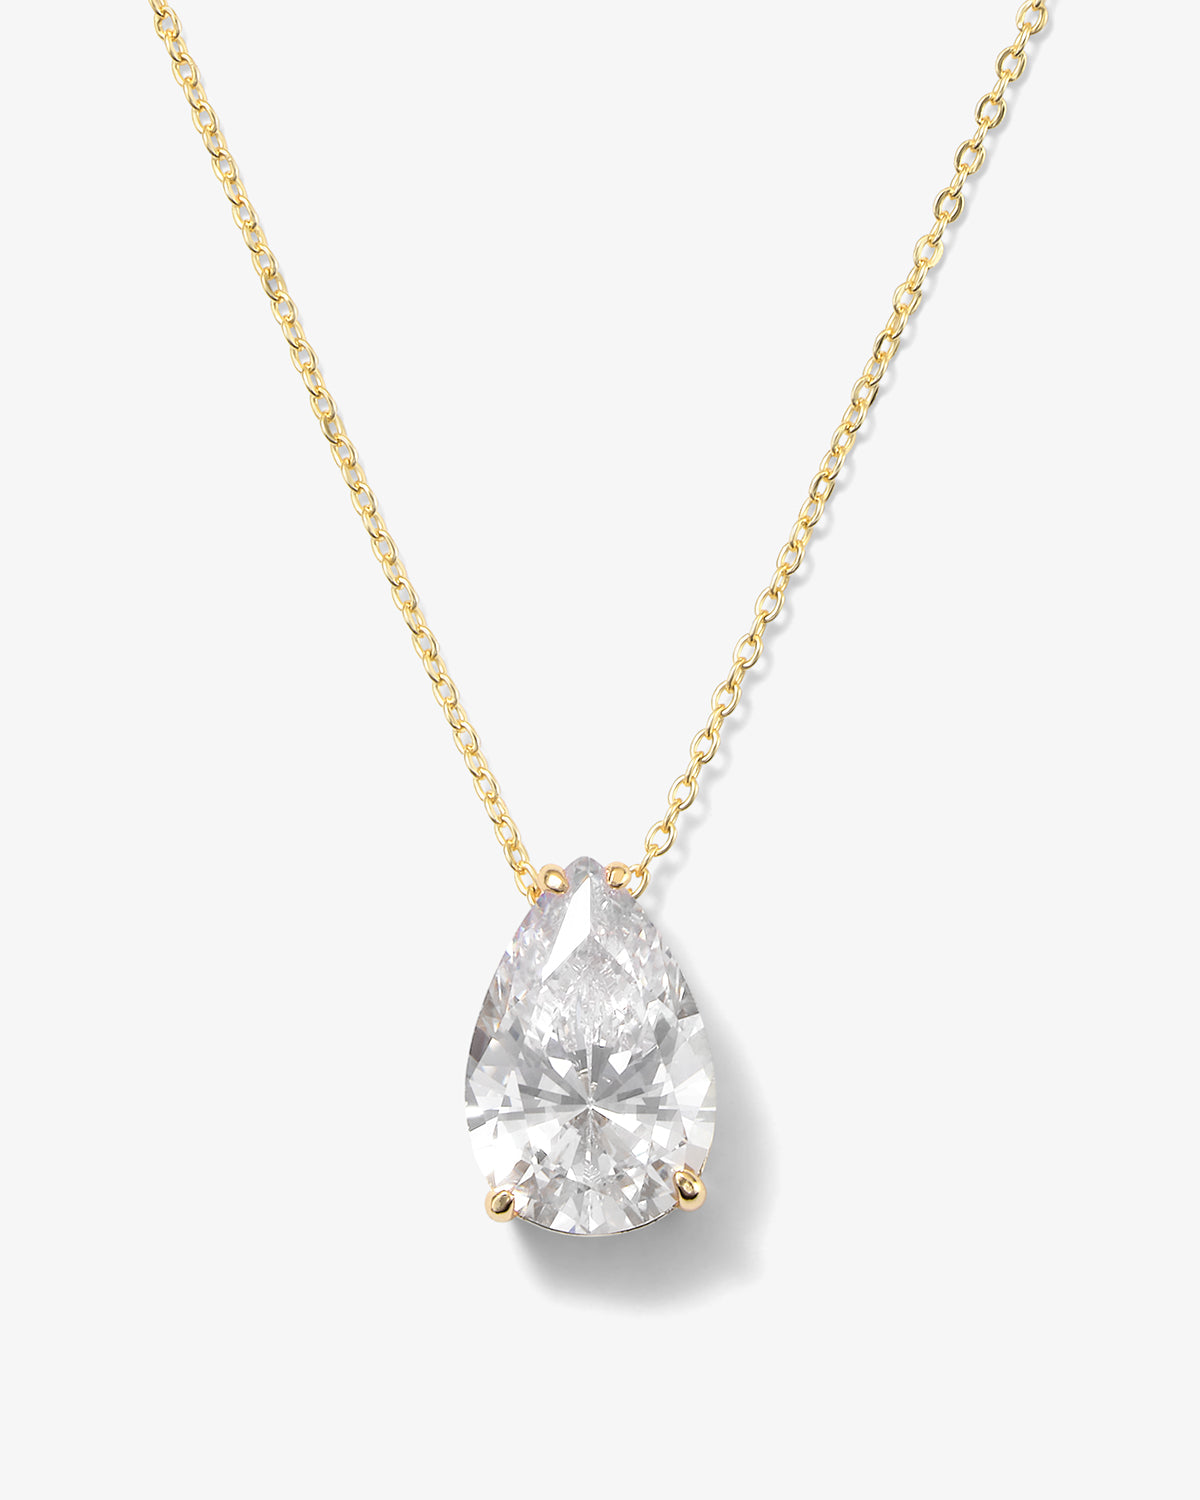 Thelma & Louise Necklace, Gold & White Diamondettes | Melinda Maria Jewelry